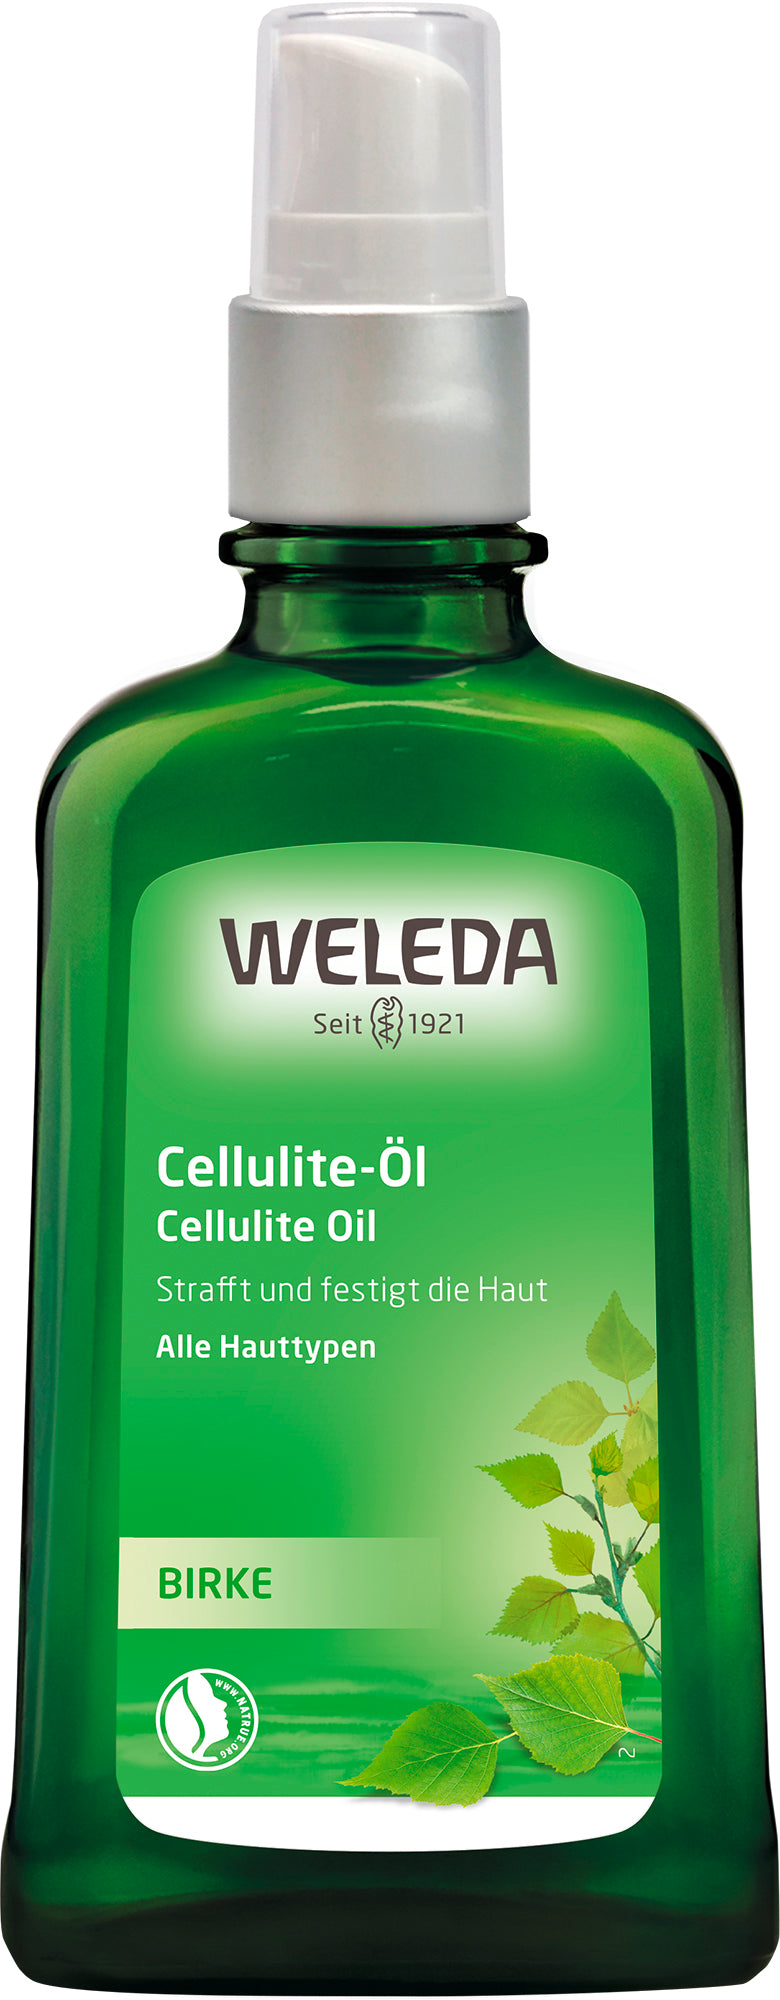 Weleda - Birke Cellulite-Öl 100 ml